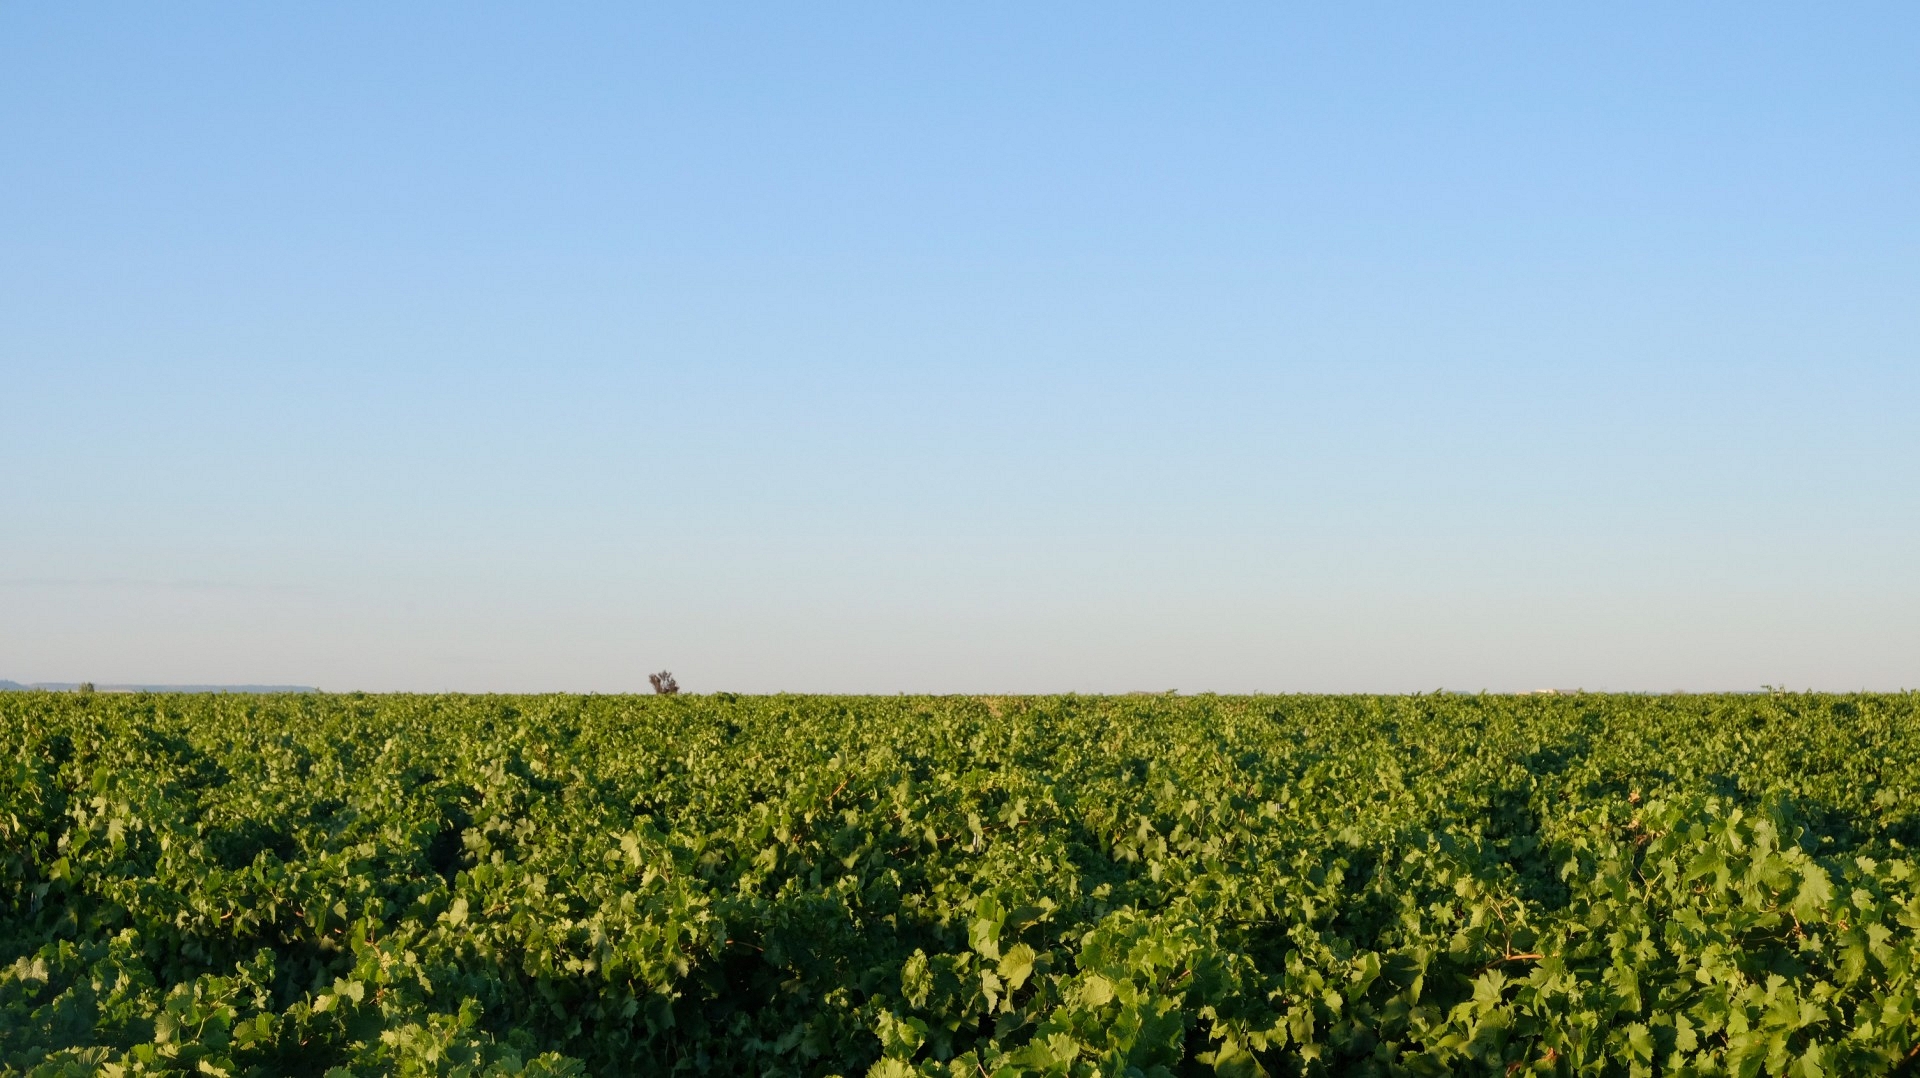 Pago de Fuente Elvira: a ‘vineyard of vineyards’ steeped in history